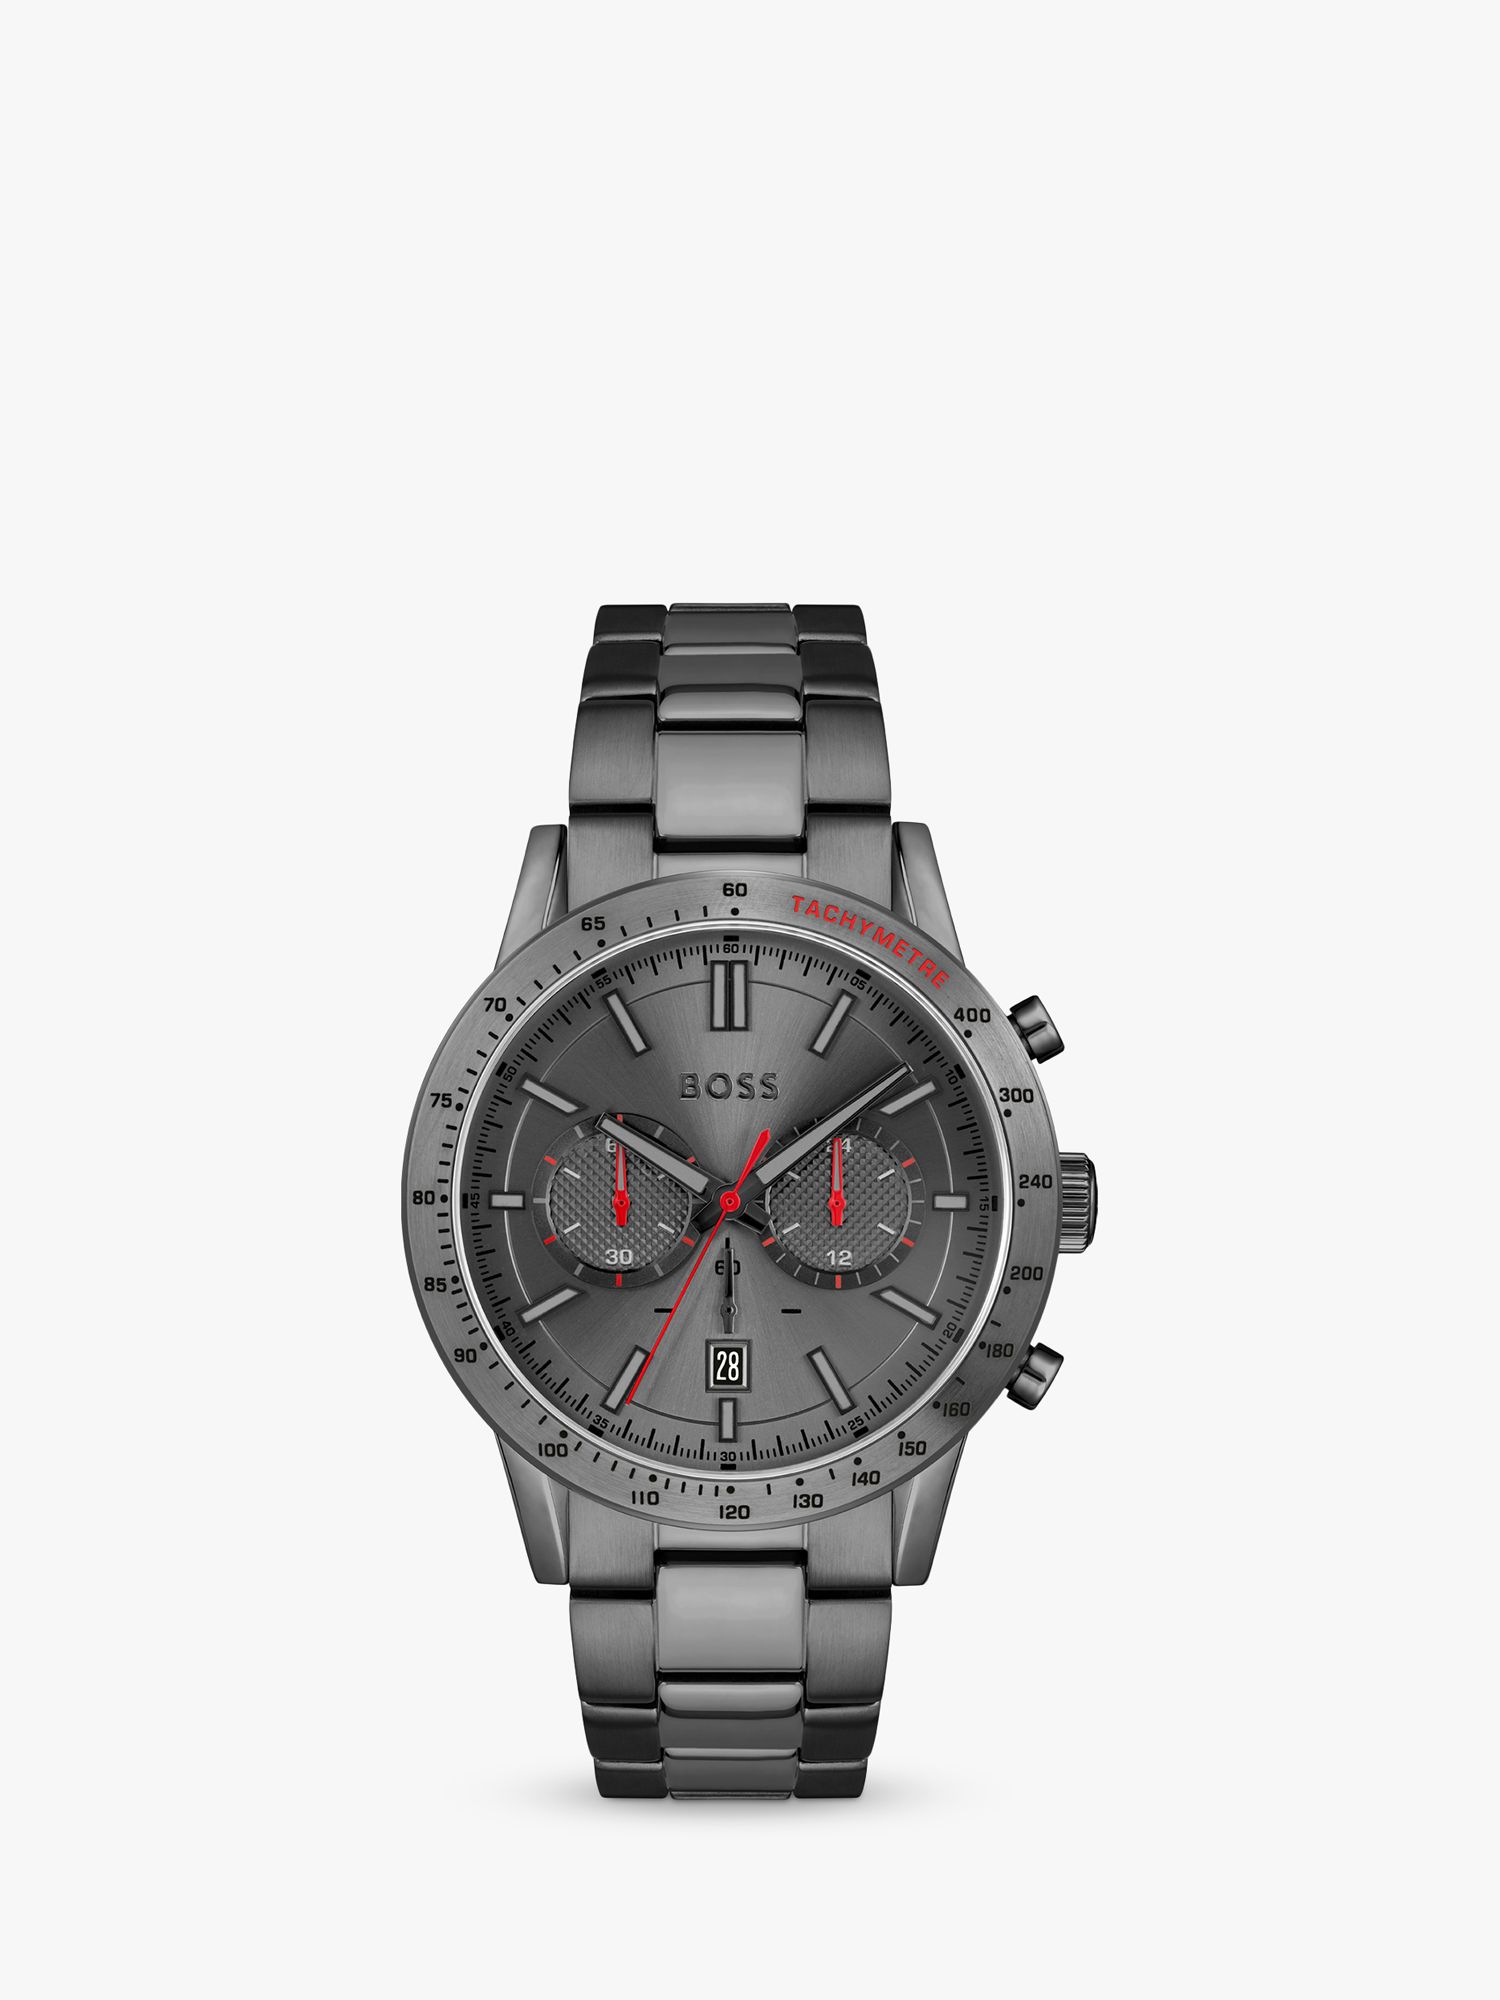 BOSS Men\'s Allure Chronograph Date Strap Partners Grey John at & Lewis Watch, 1513924 Bracelet